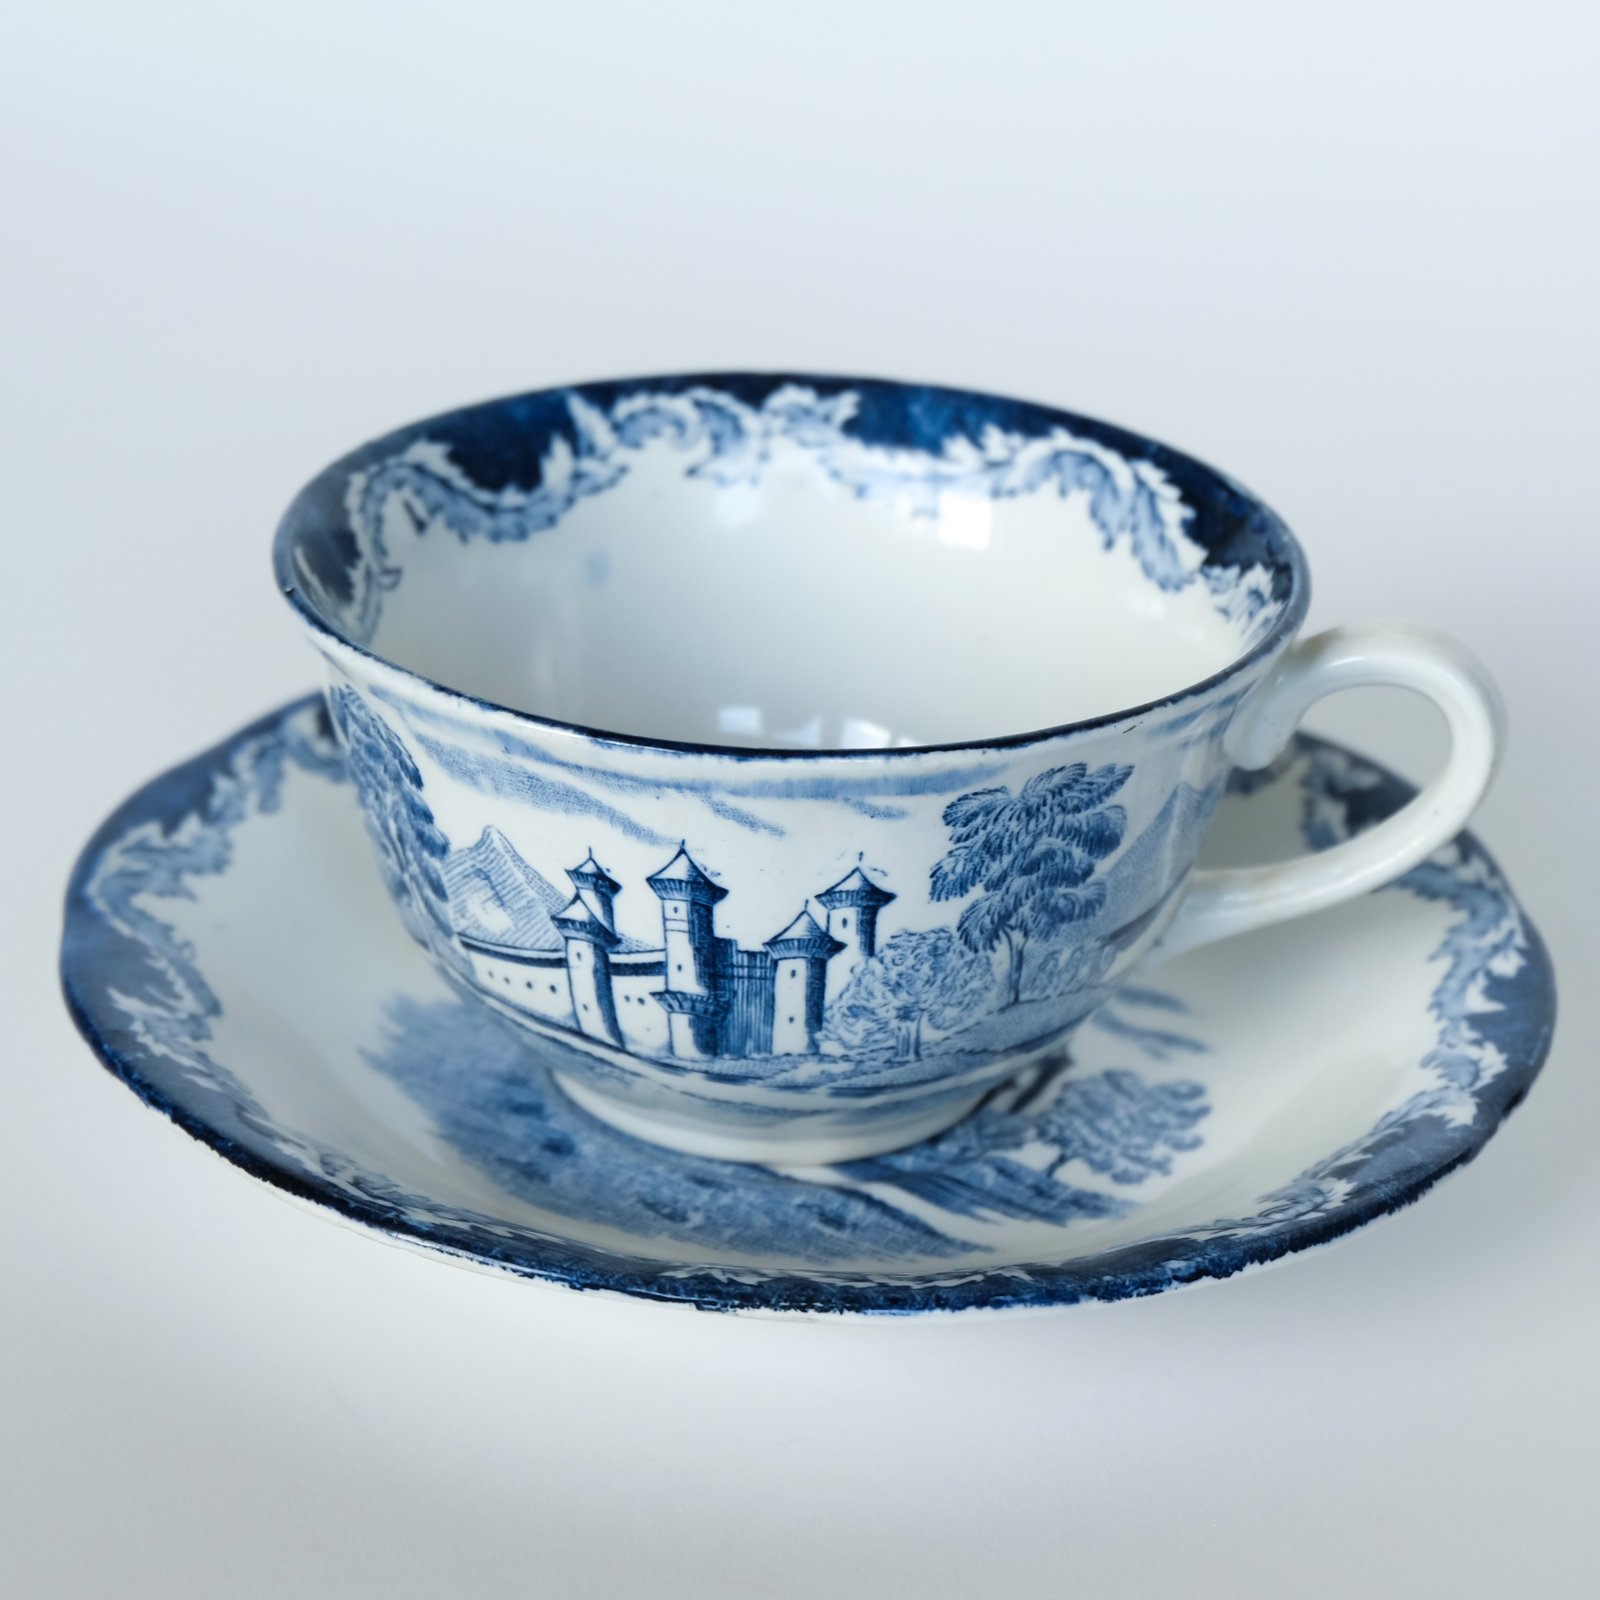 Vintage Rörstrand cup and saucer